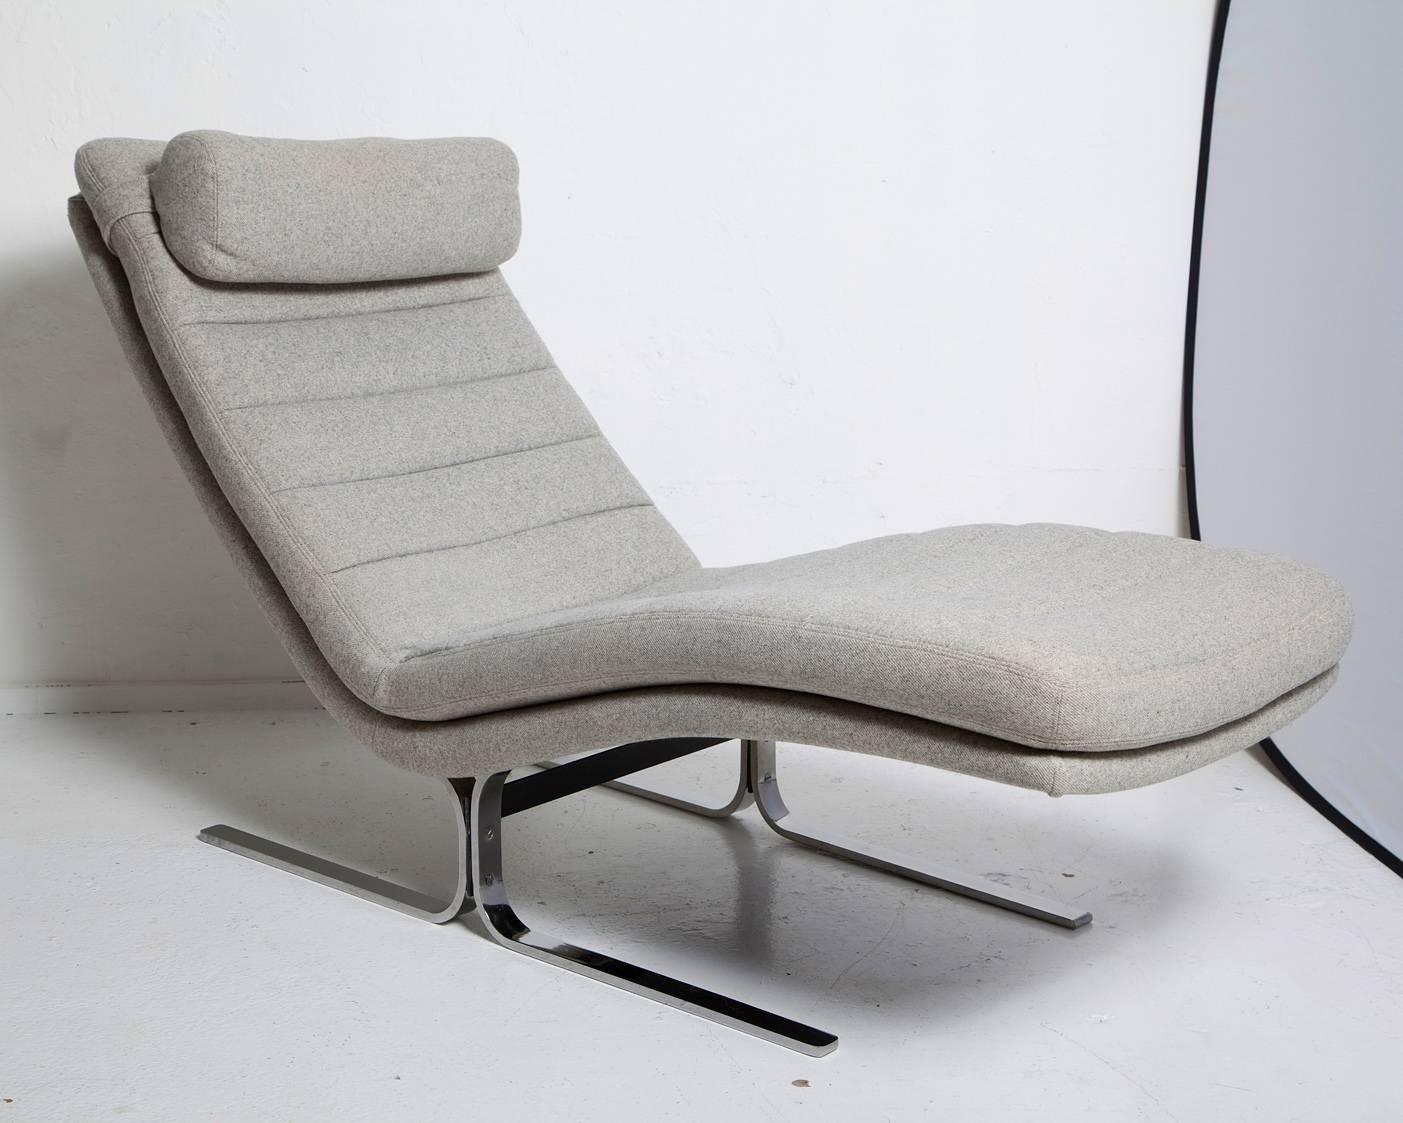 1970s Chromed Steel Chaise Longue by Brayton International (Moderne der Mitte des Jahrhunderts)